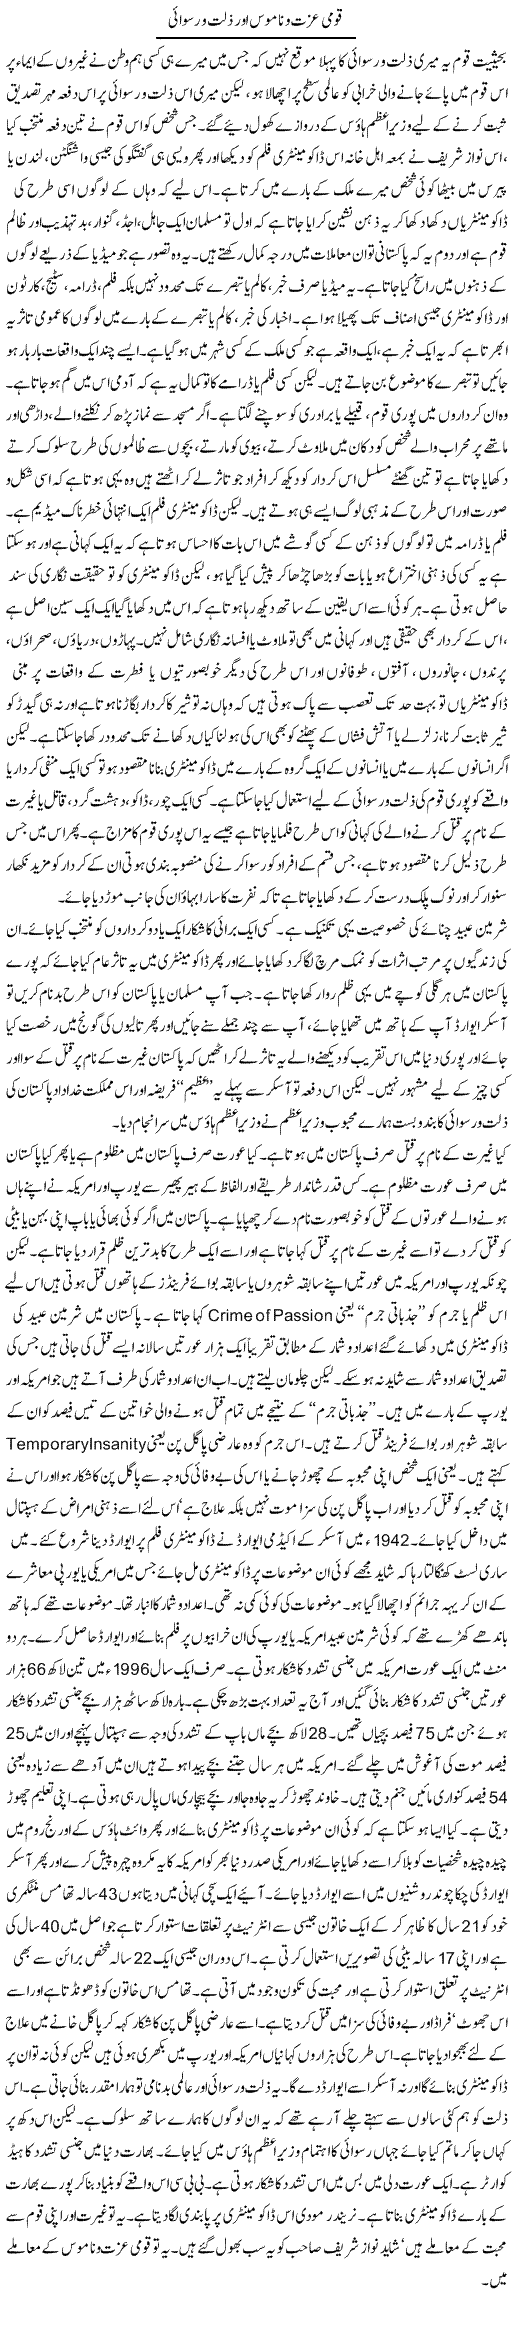 Qaumi Izzat O Namoos Aor Zillat O Ruswai | Orya Maqbool Jan | Daily Urdu Columns